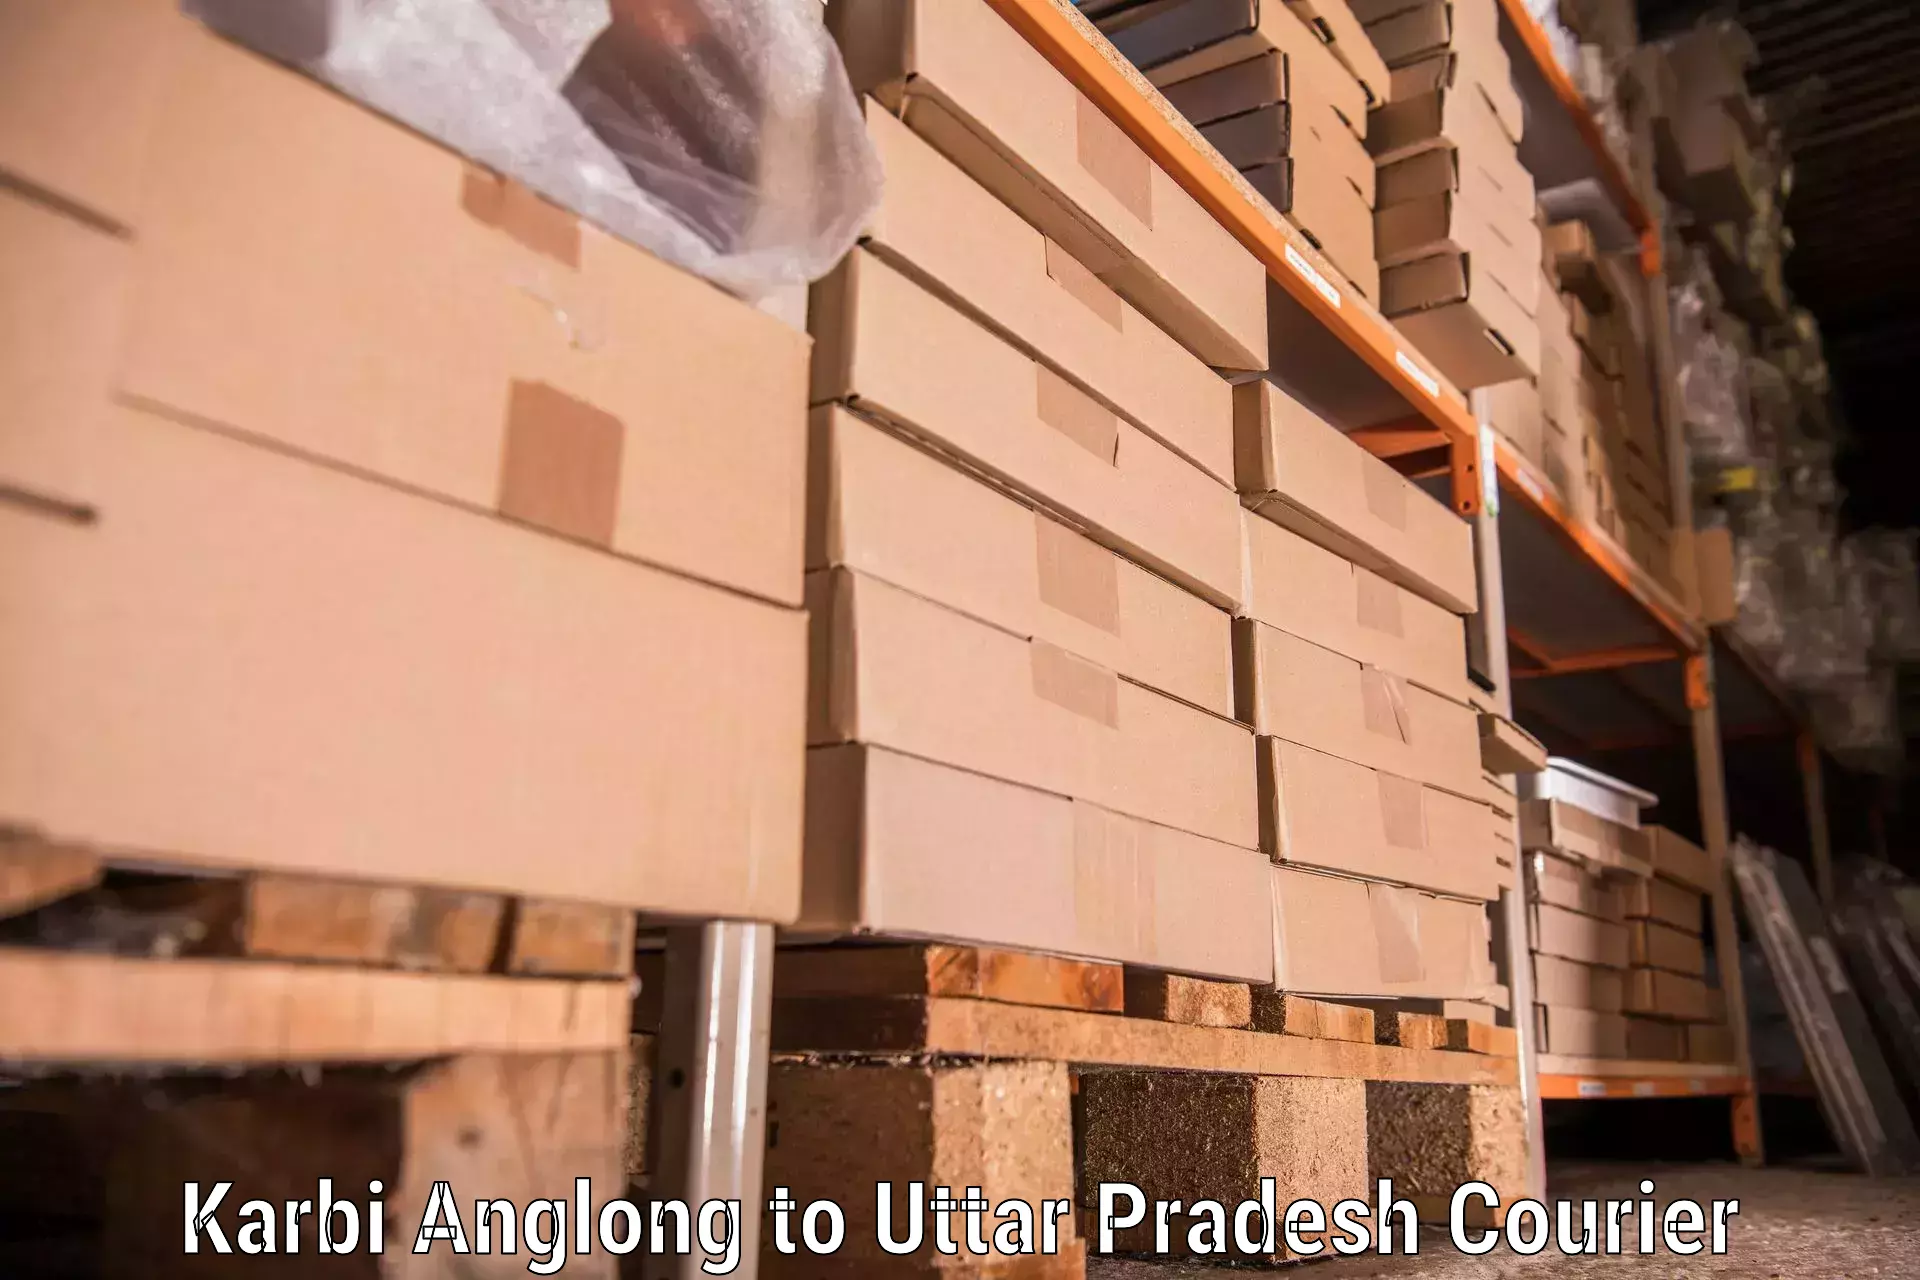 Professional moving company Karbi Anglong to Uttar Pradesh